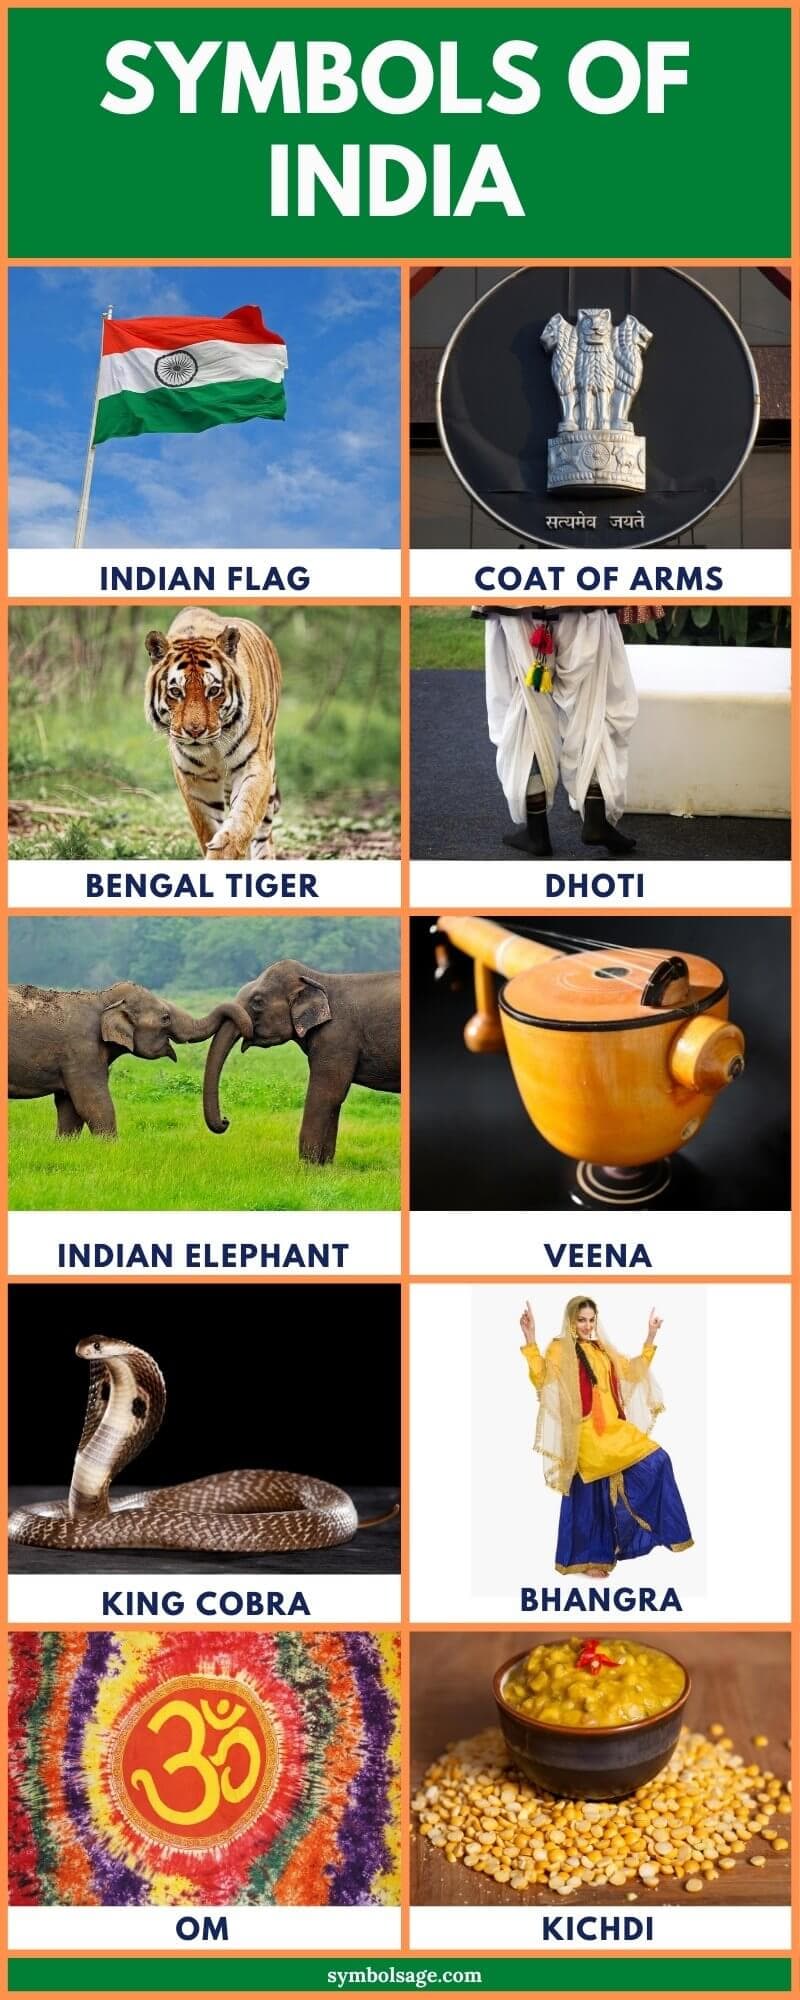 Symbols of India list